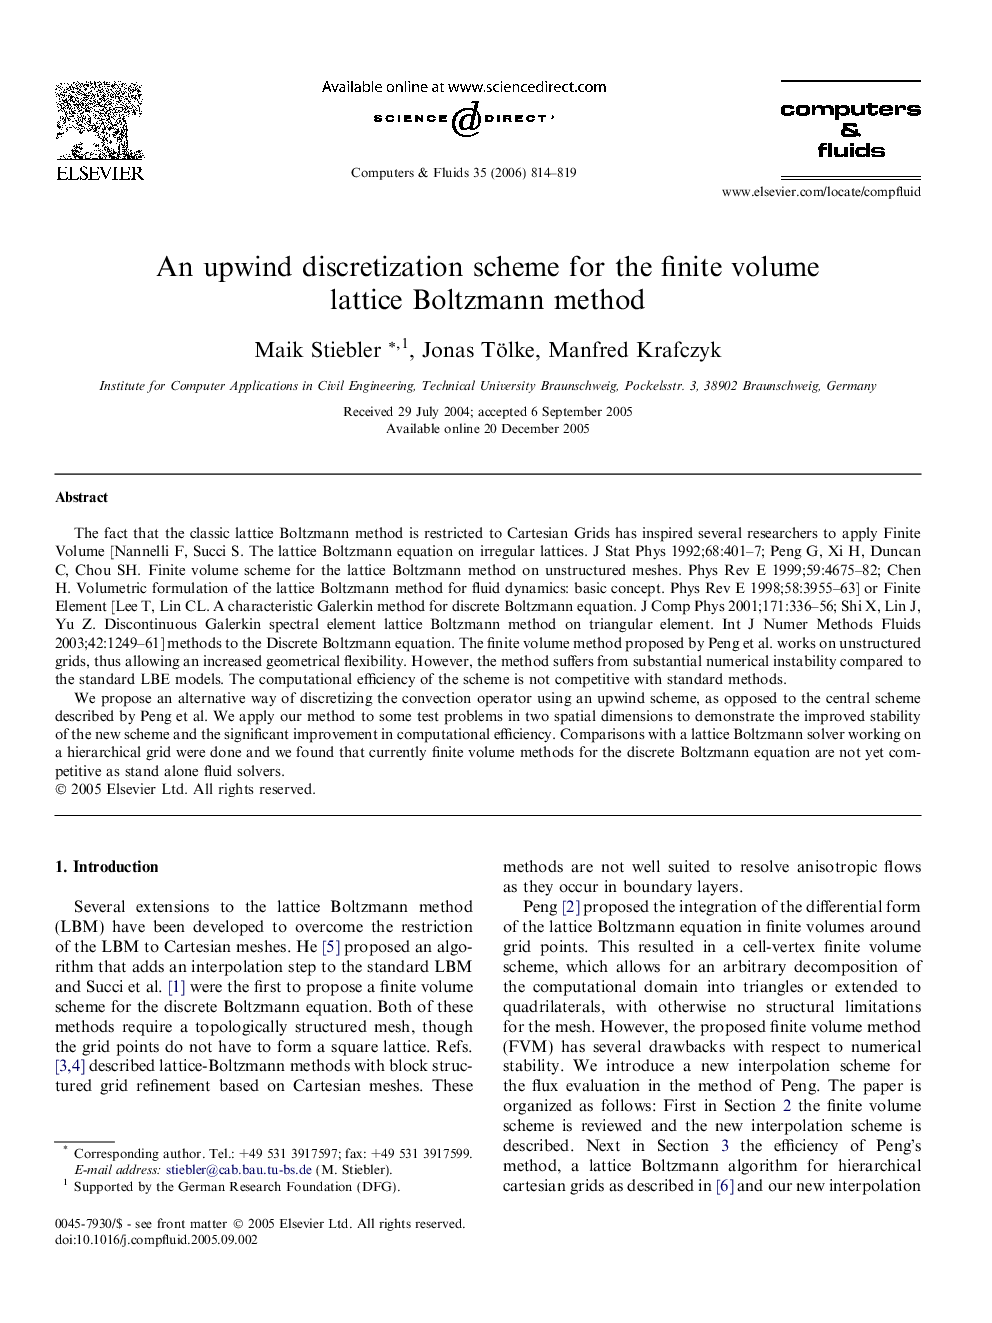 An upwind discretization scheme for the finite volume lattice Boltzmann method